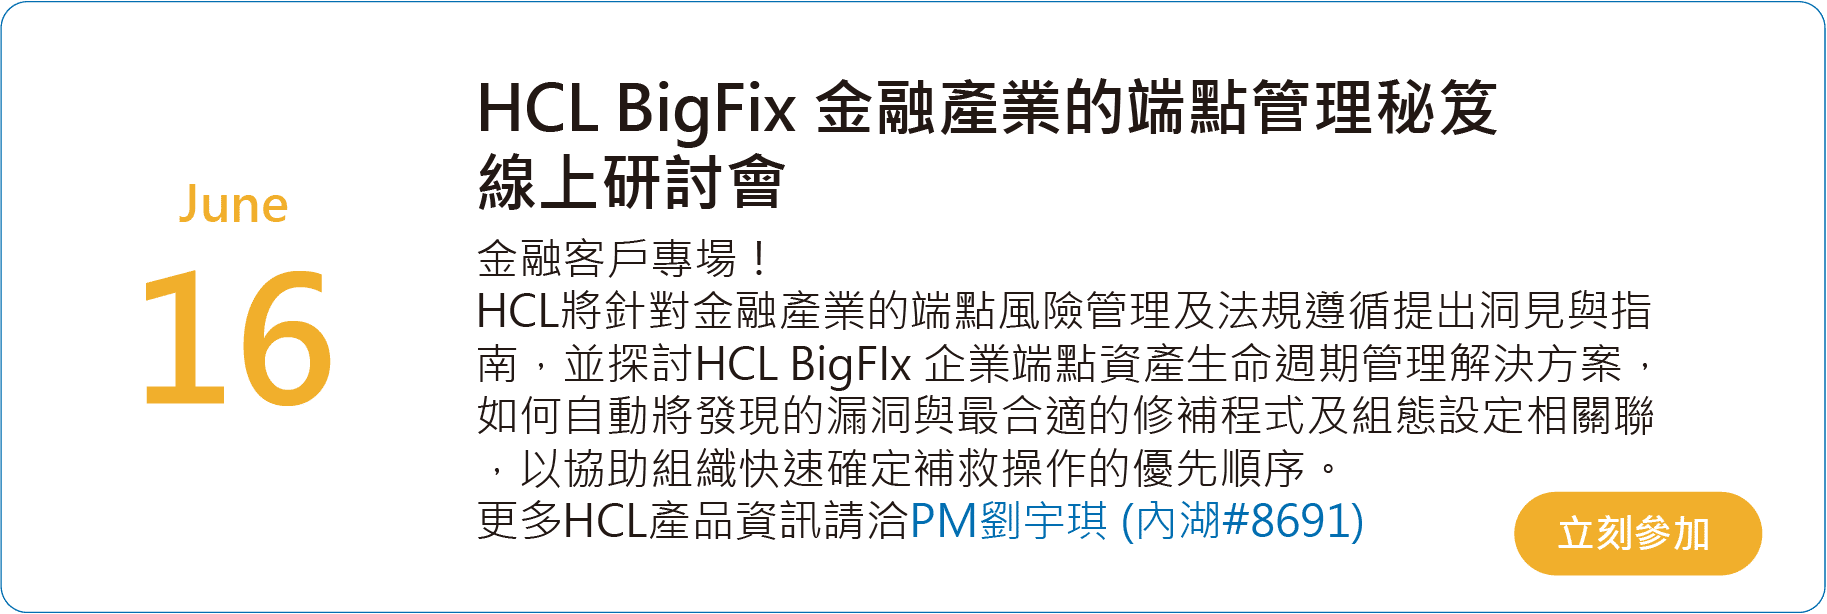 HCL BigFix金融產業的端點管理